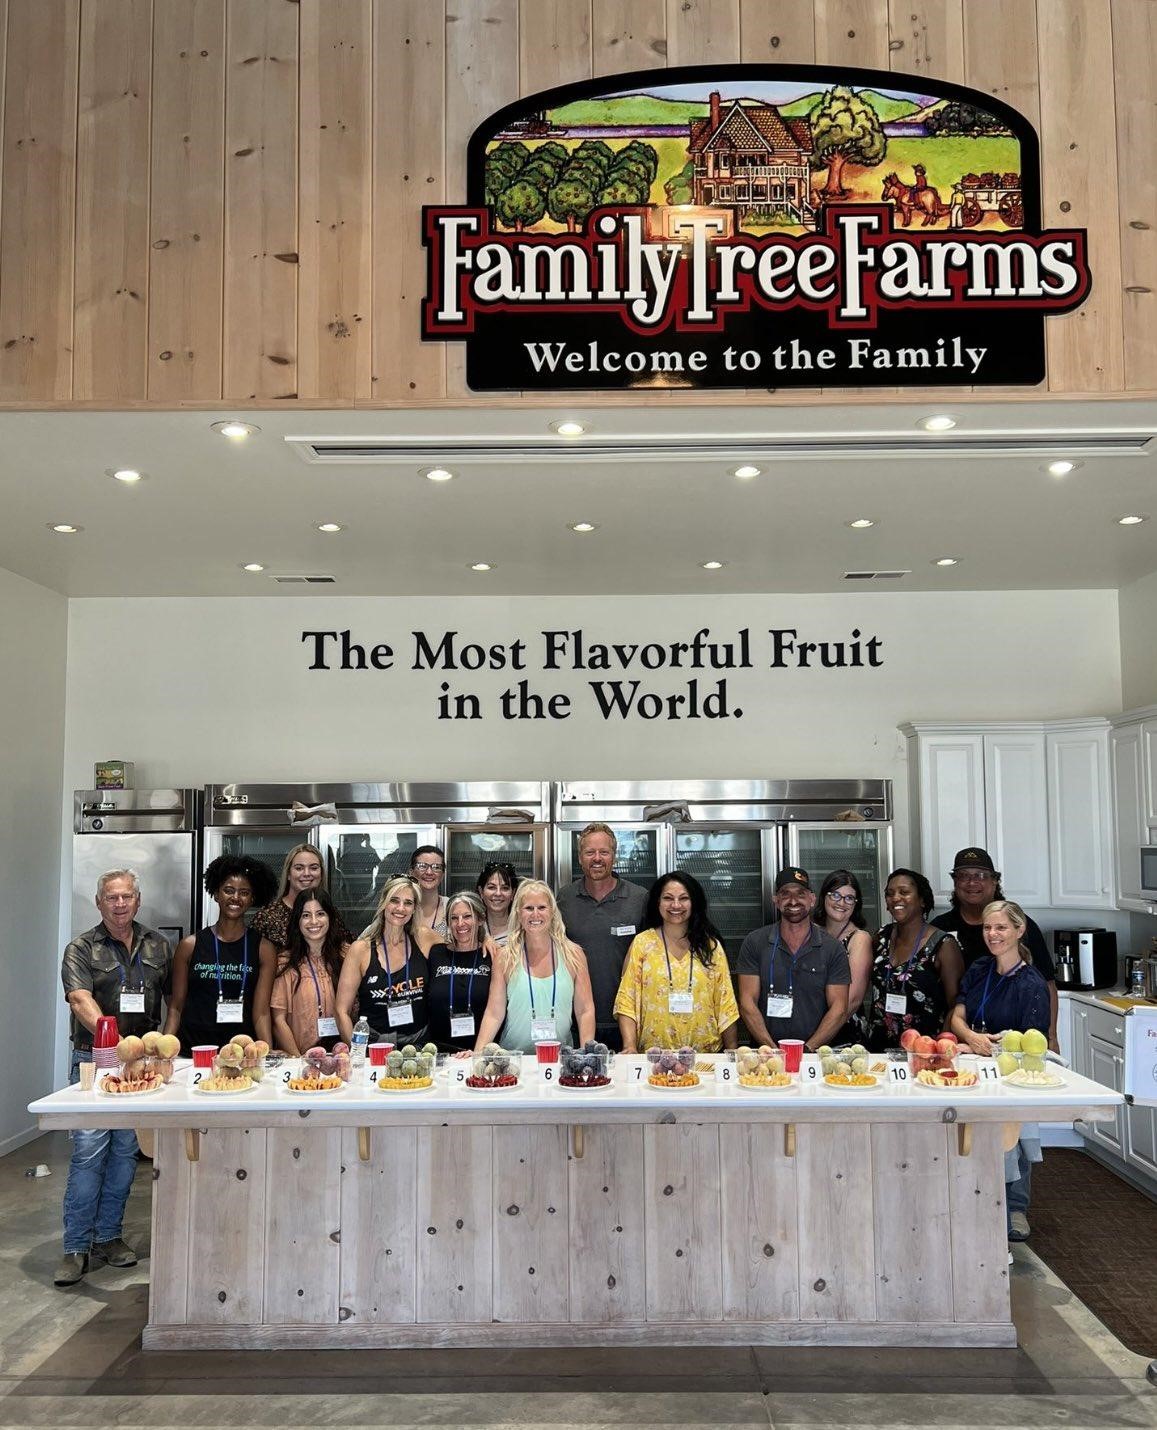 Family Tree Farms staff